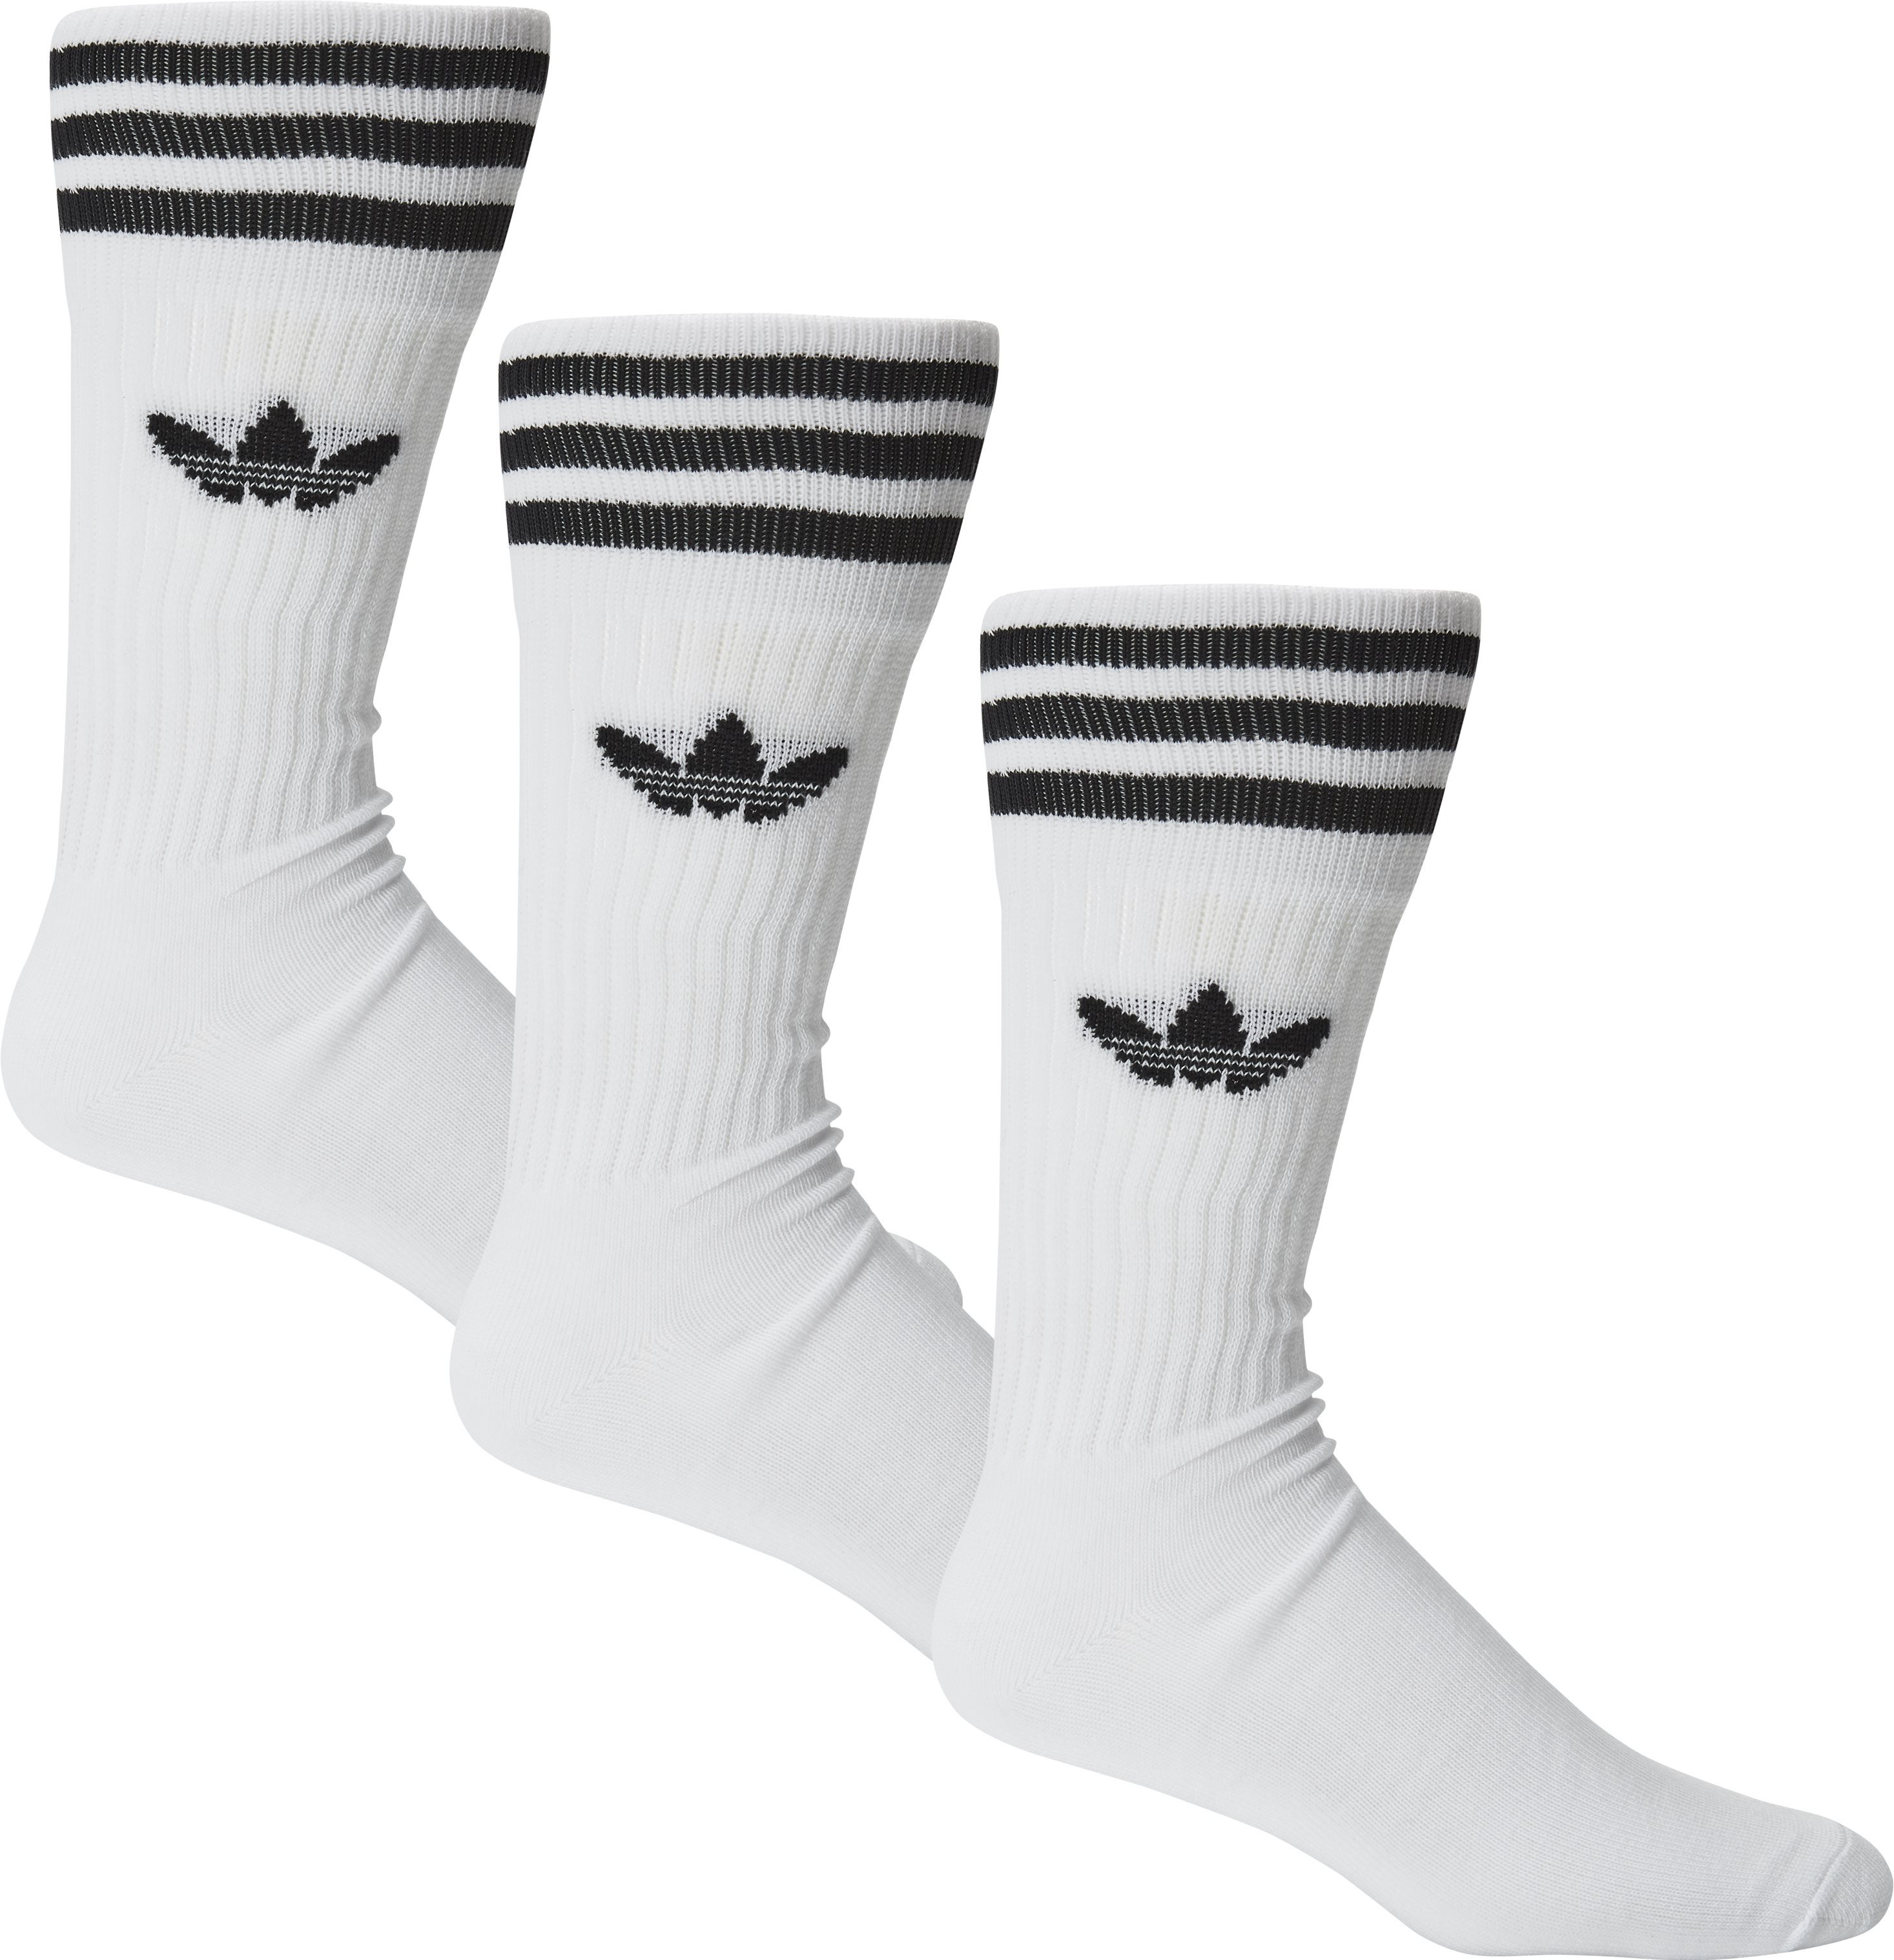 Adidas Originals Socks SOLID CREW SOCK S214 FW21 White